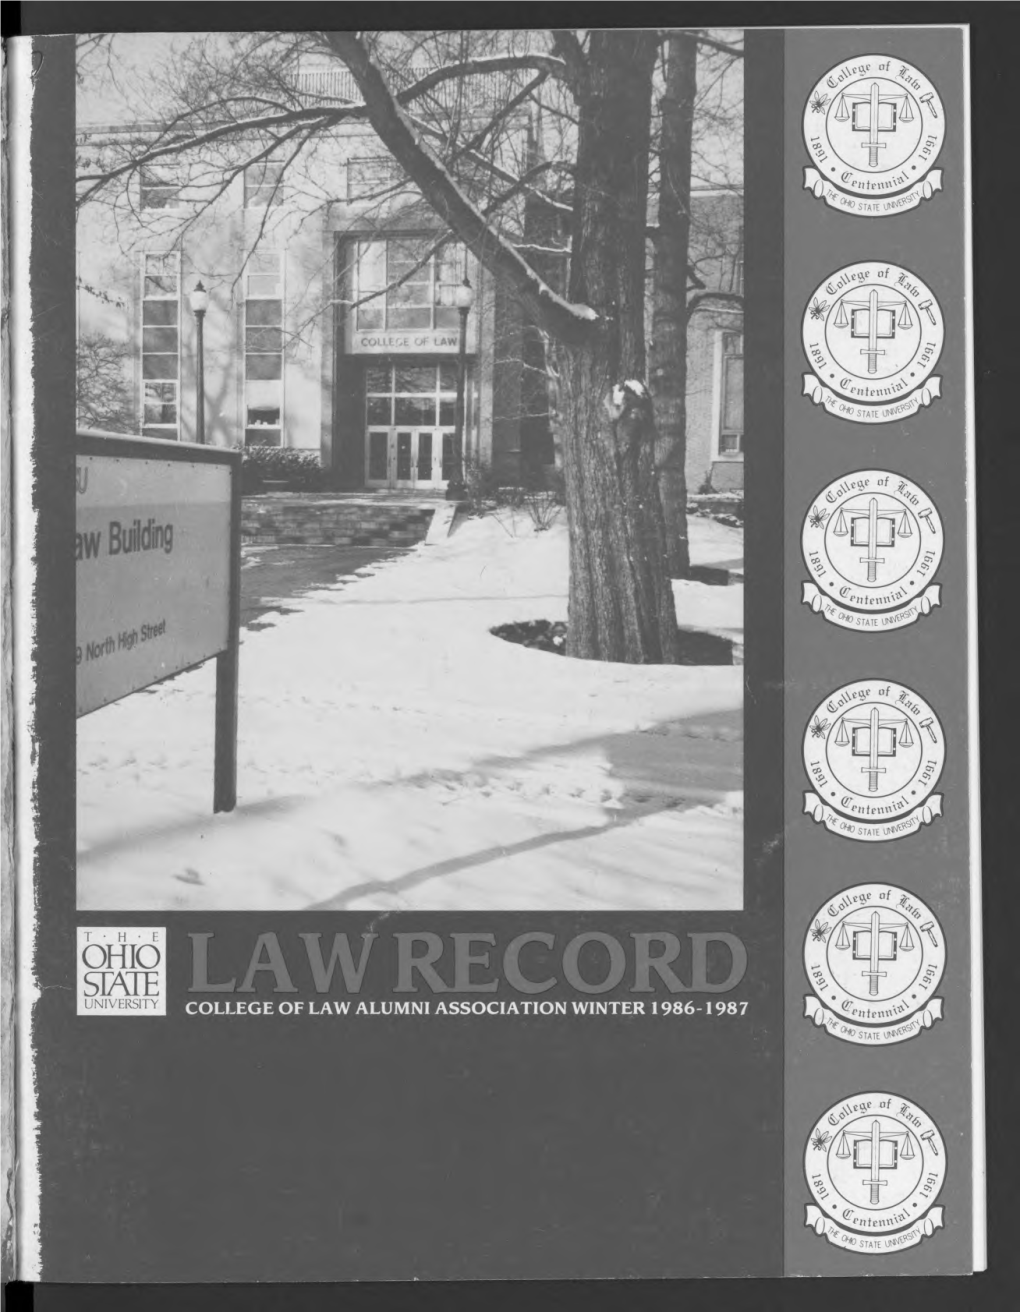 Ohio Seaie University College of Law Alumni Association Winter 1986-1987